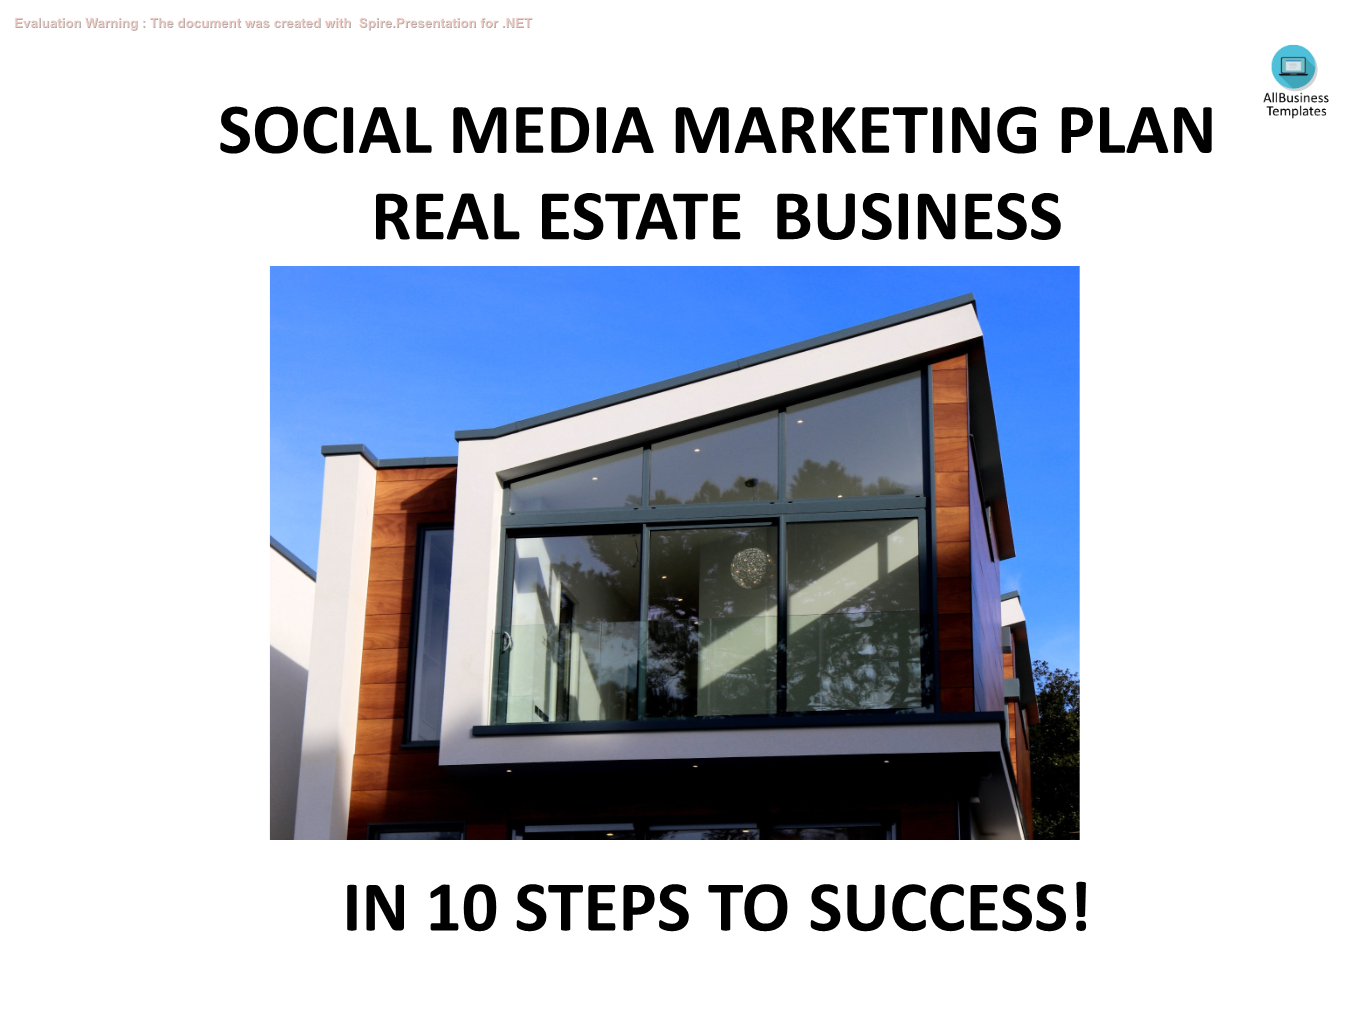 Real Estate Social Media Marketing Plan main image